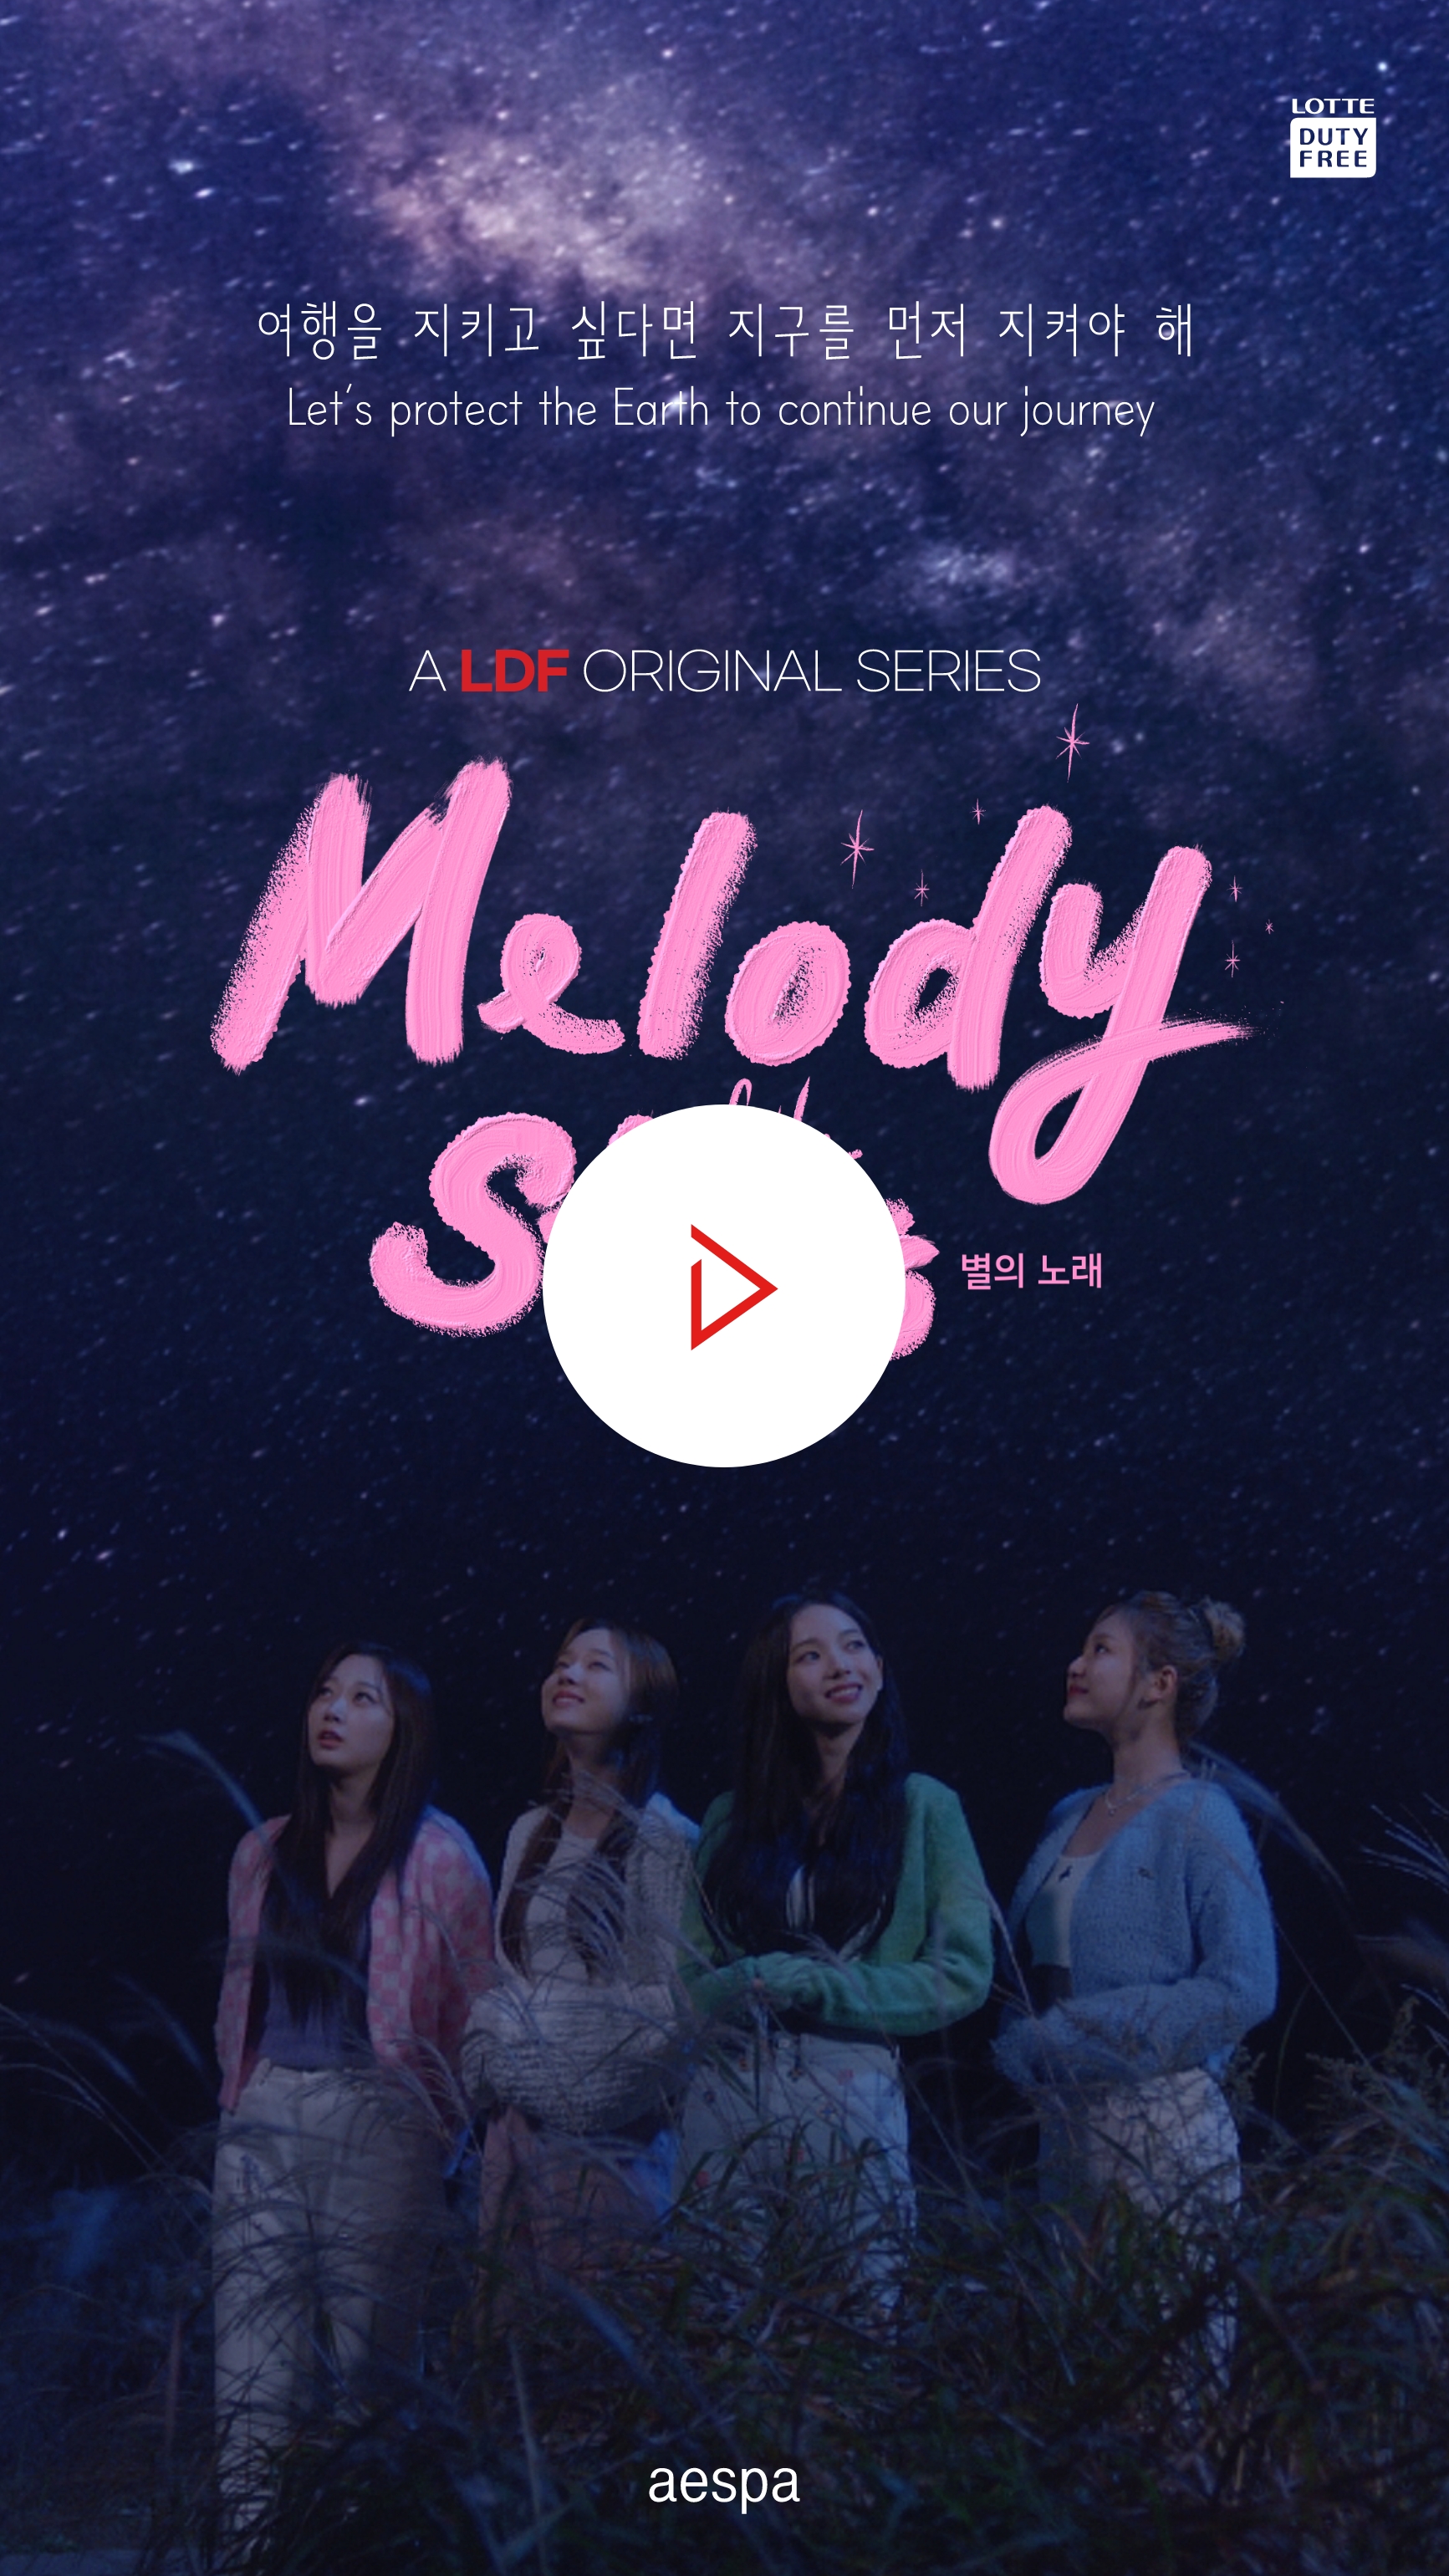 Melody star 티저 포스터